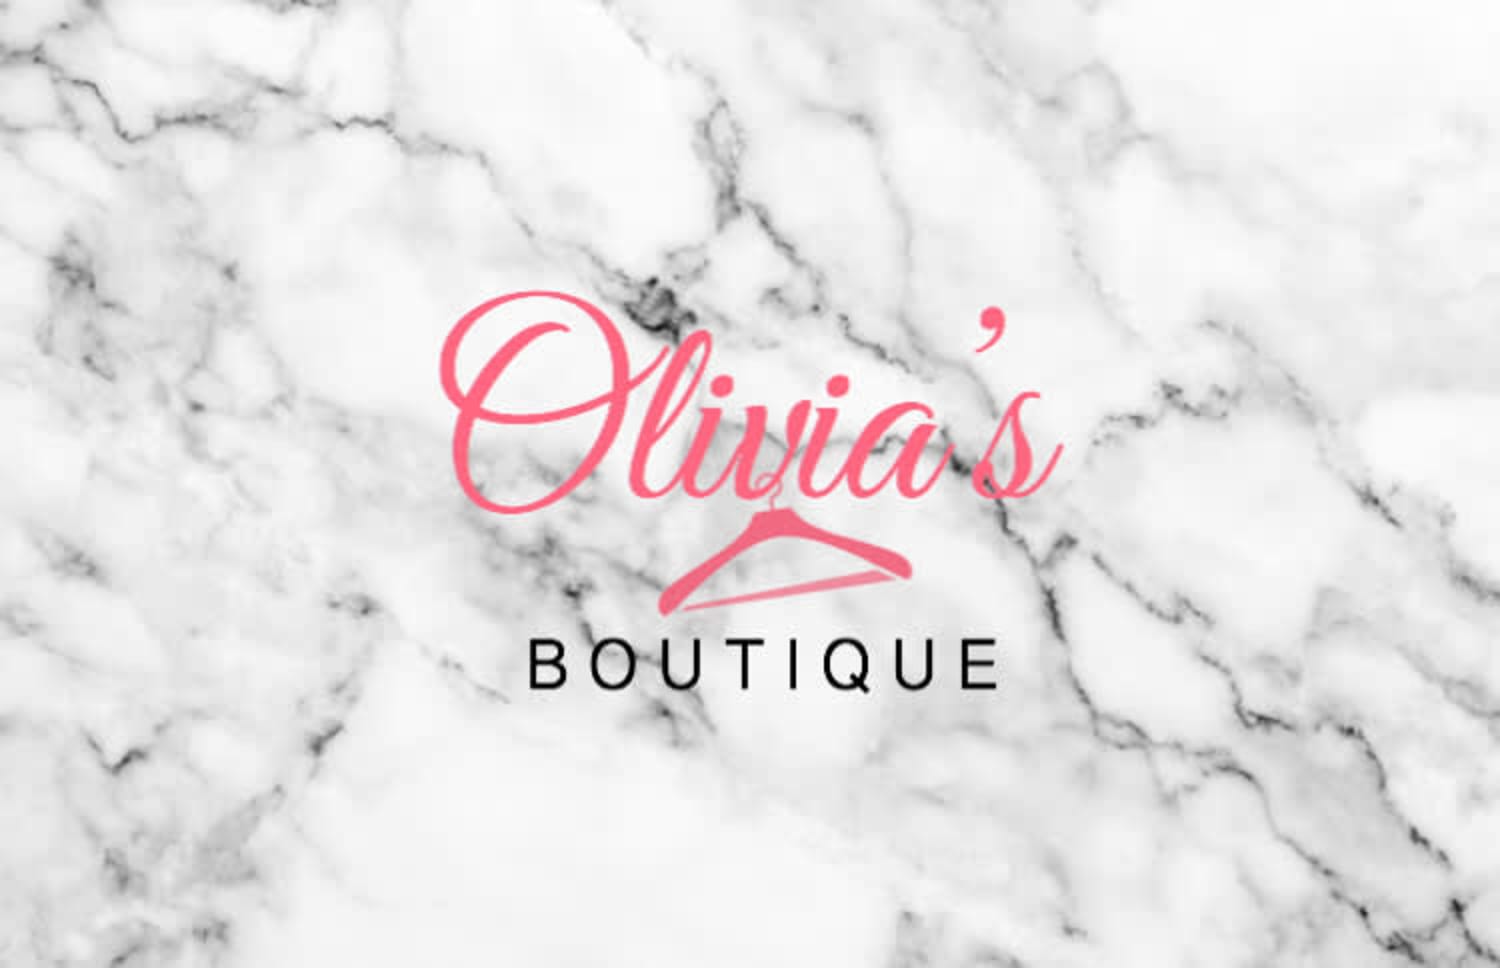 Olivia's Boutique